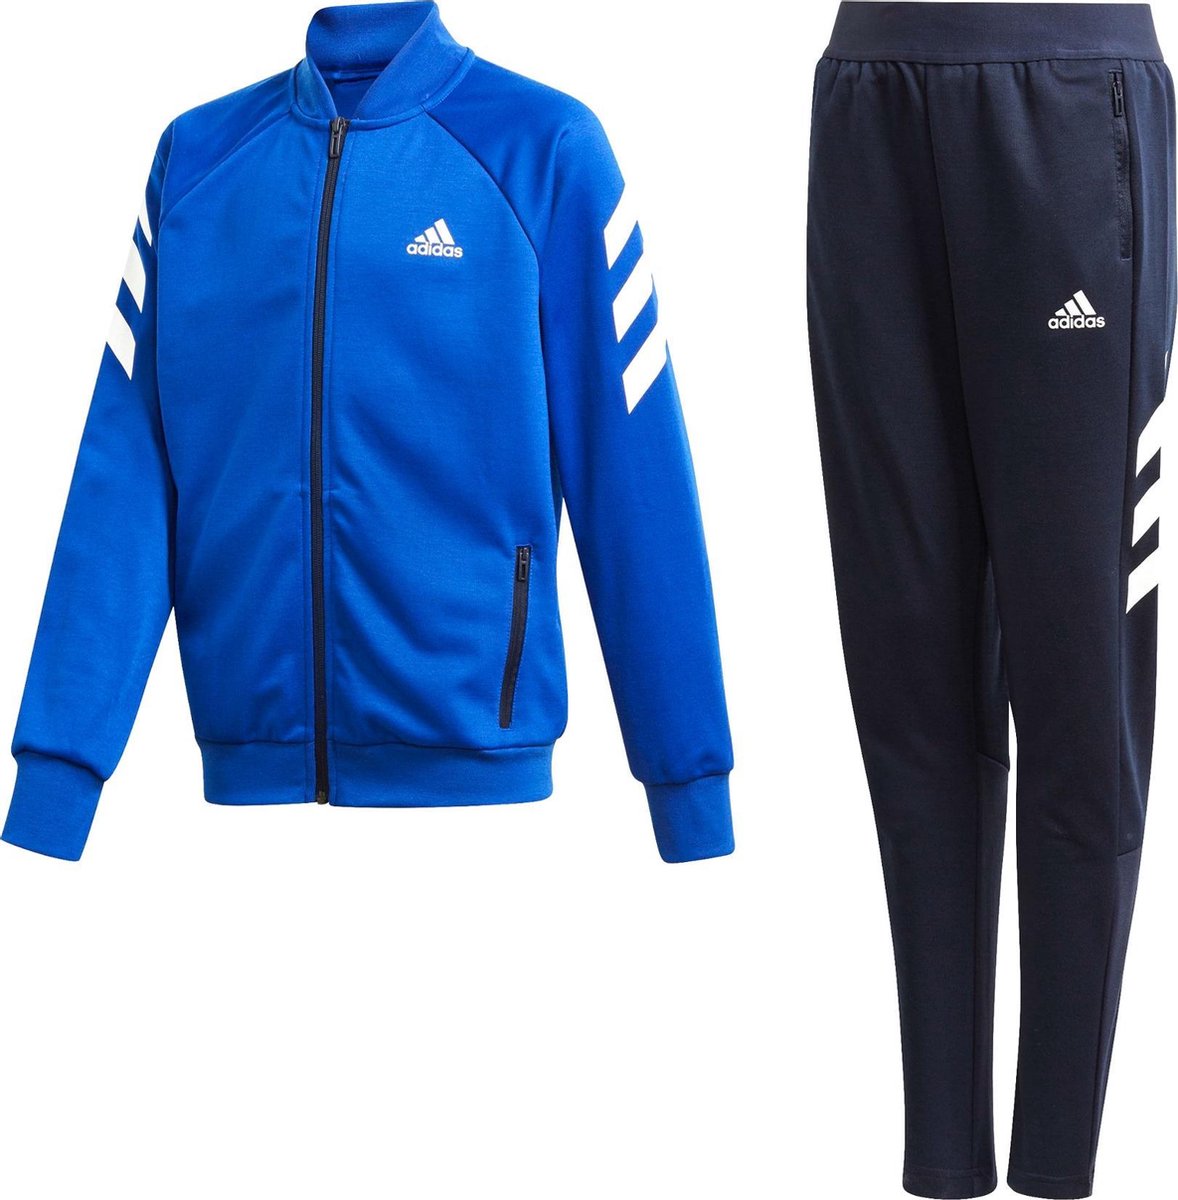 adidas Trainingspak - Maat 116 - Unisex - blauw/donkerblauw/wit | bol